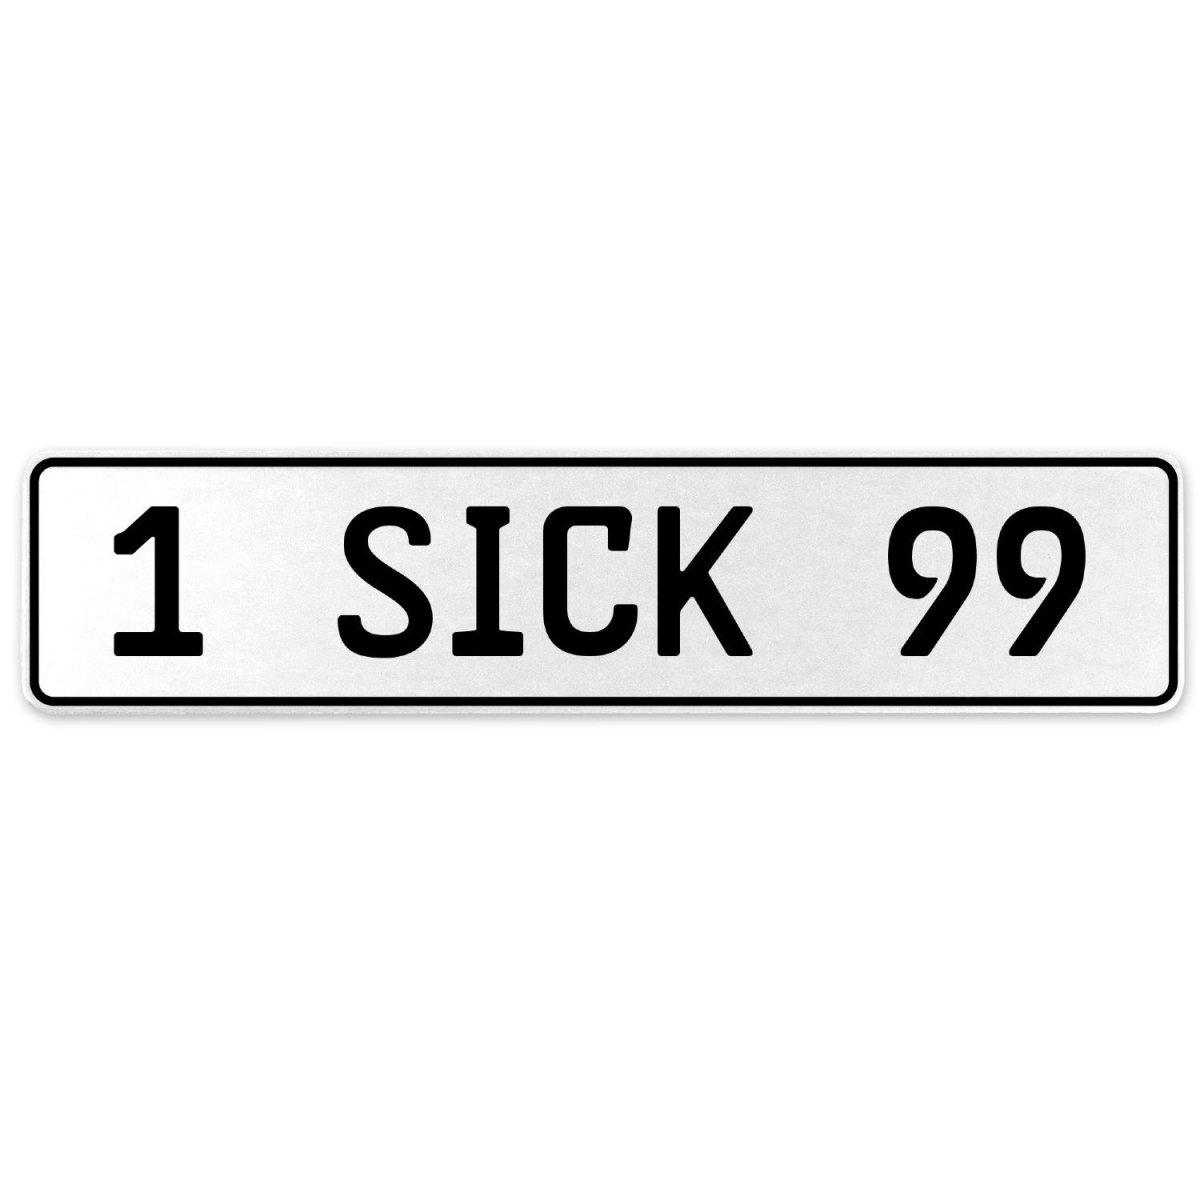 554498 1 Sick 99 - White Aluminum Street Sign Mancave Euro Plate Name Door Sign Wall